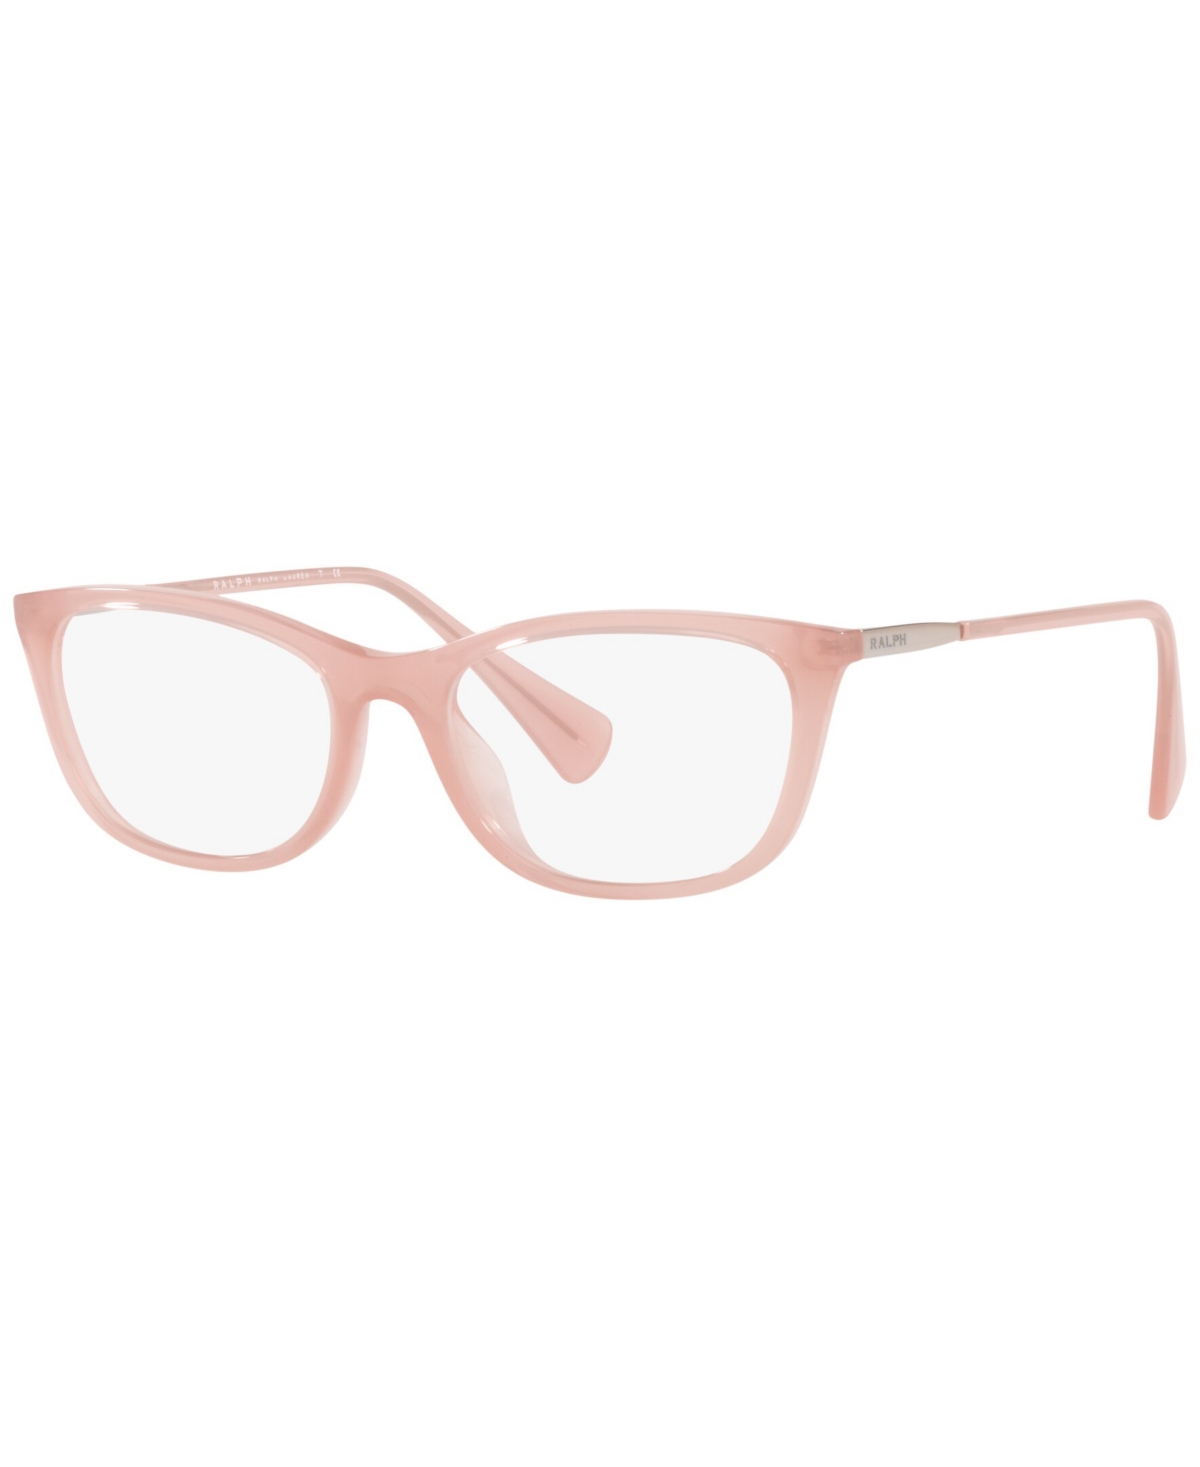 RA7138U Women's Oval Eyeglasses - Shiny Opal Rose